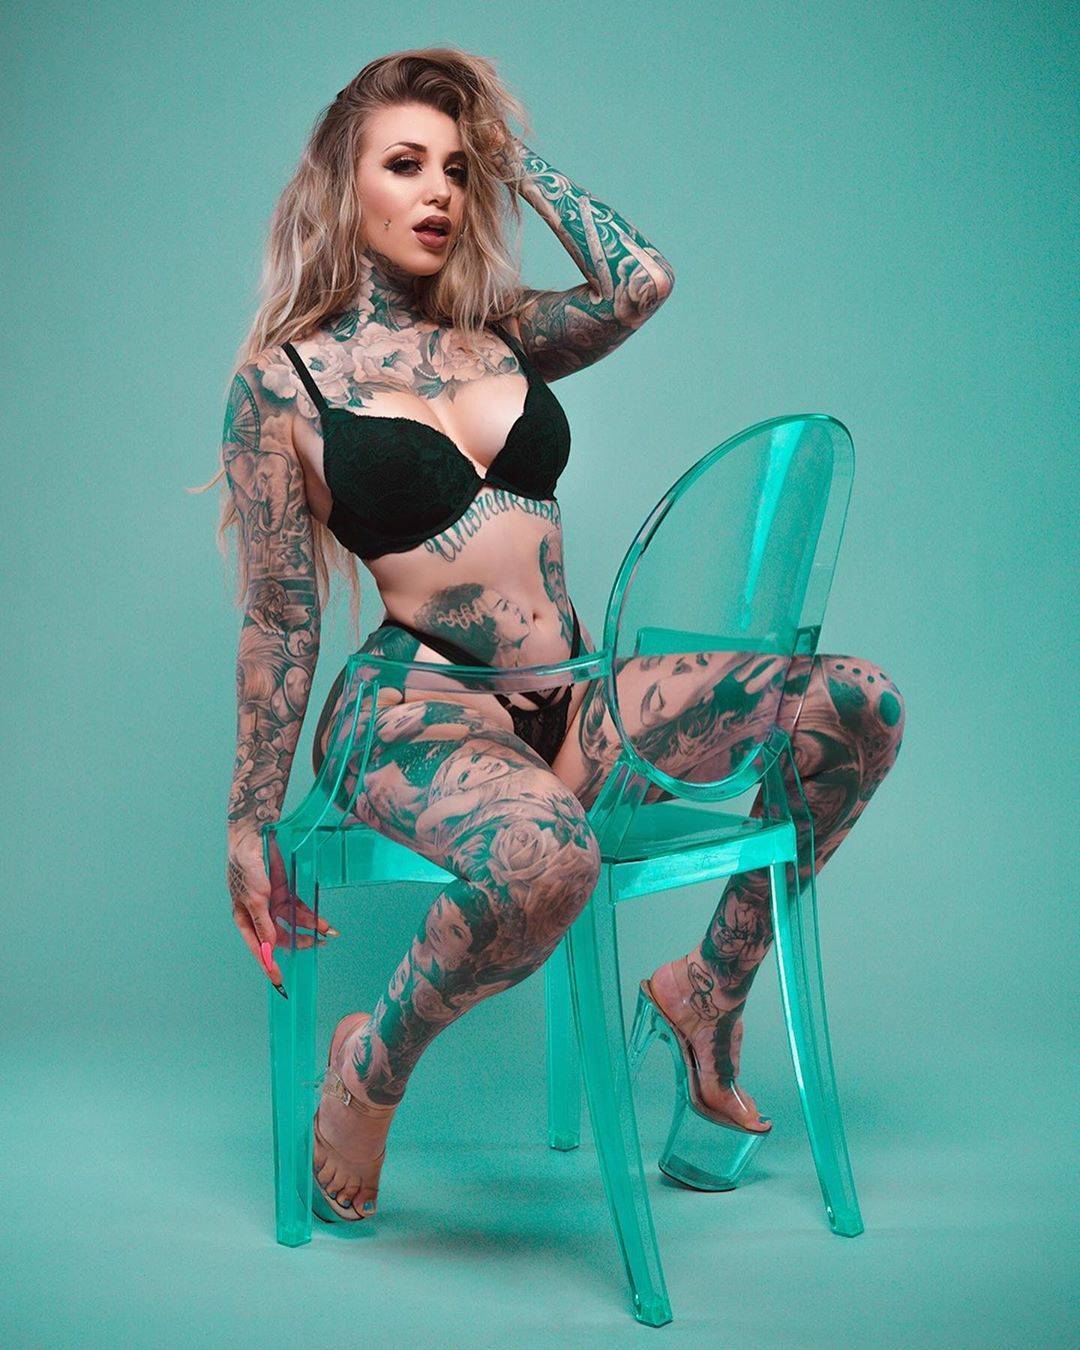 Tattoo artist and model Sabrina Sawyers, girl with tattoo Montréal, Canada.